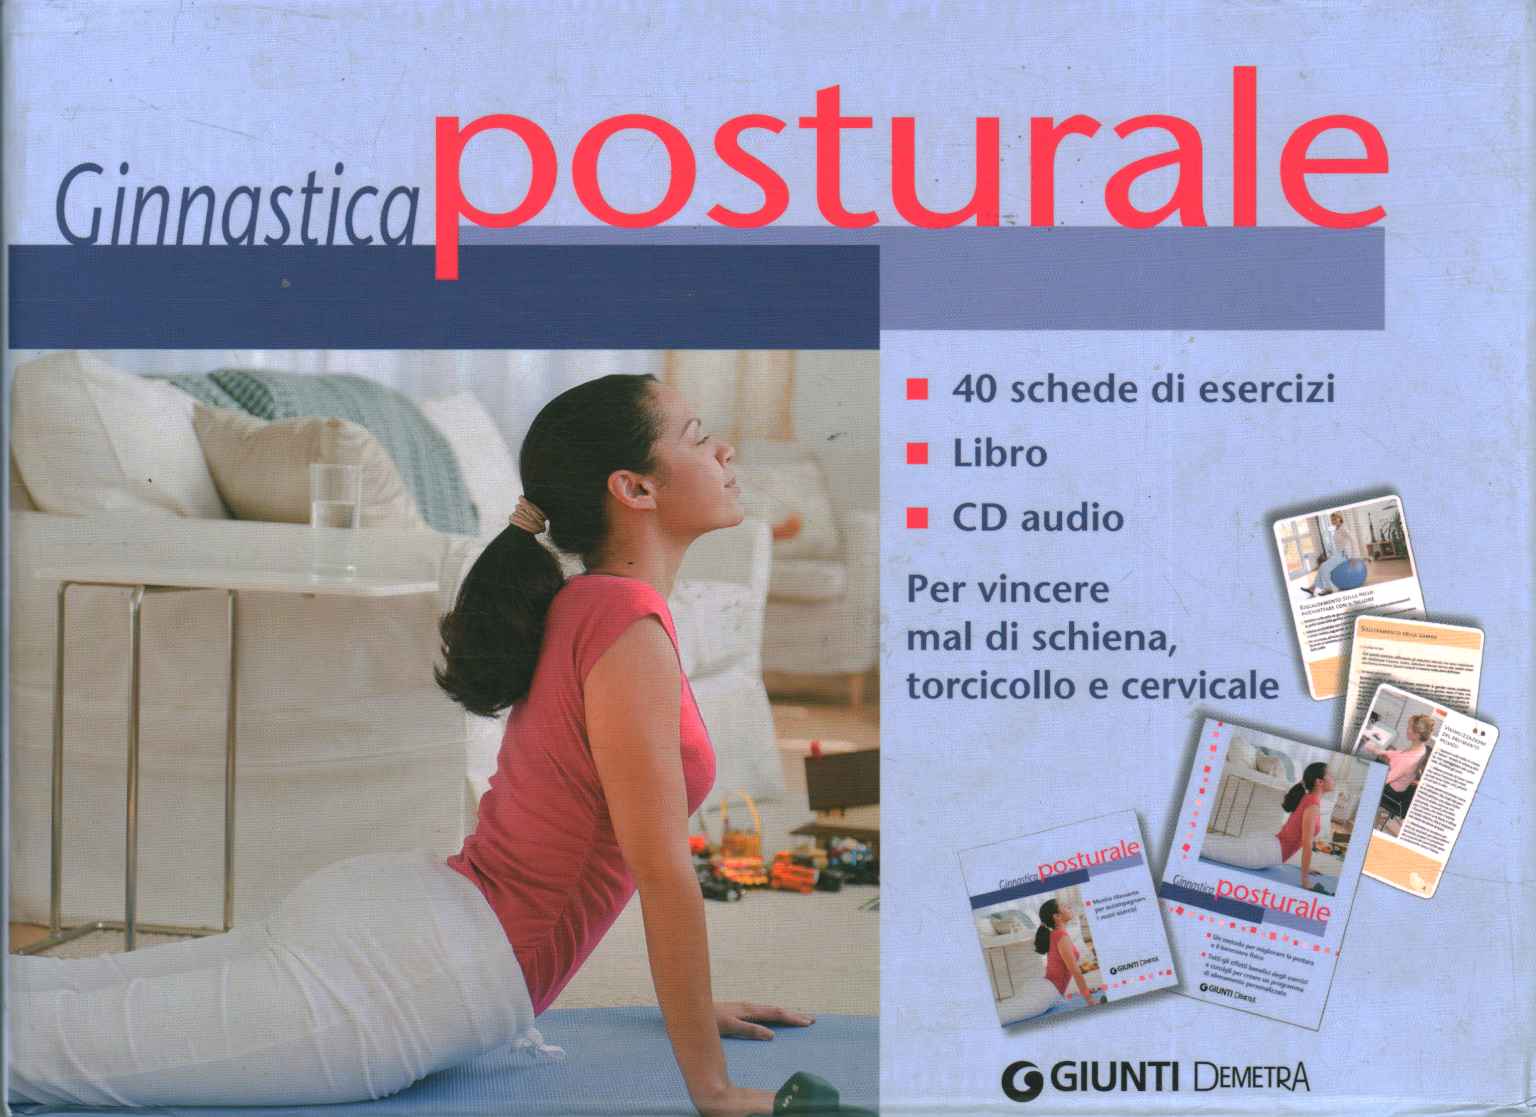 Postural gymnastics